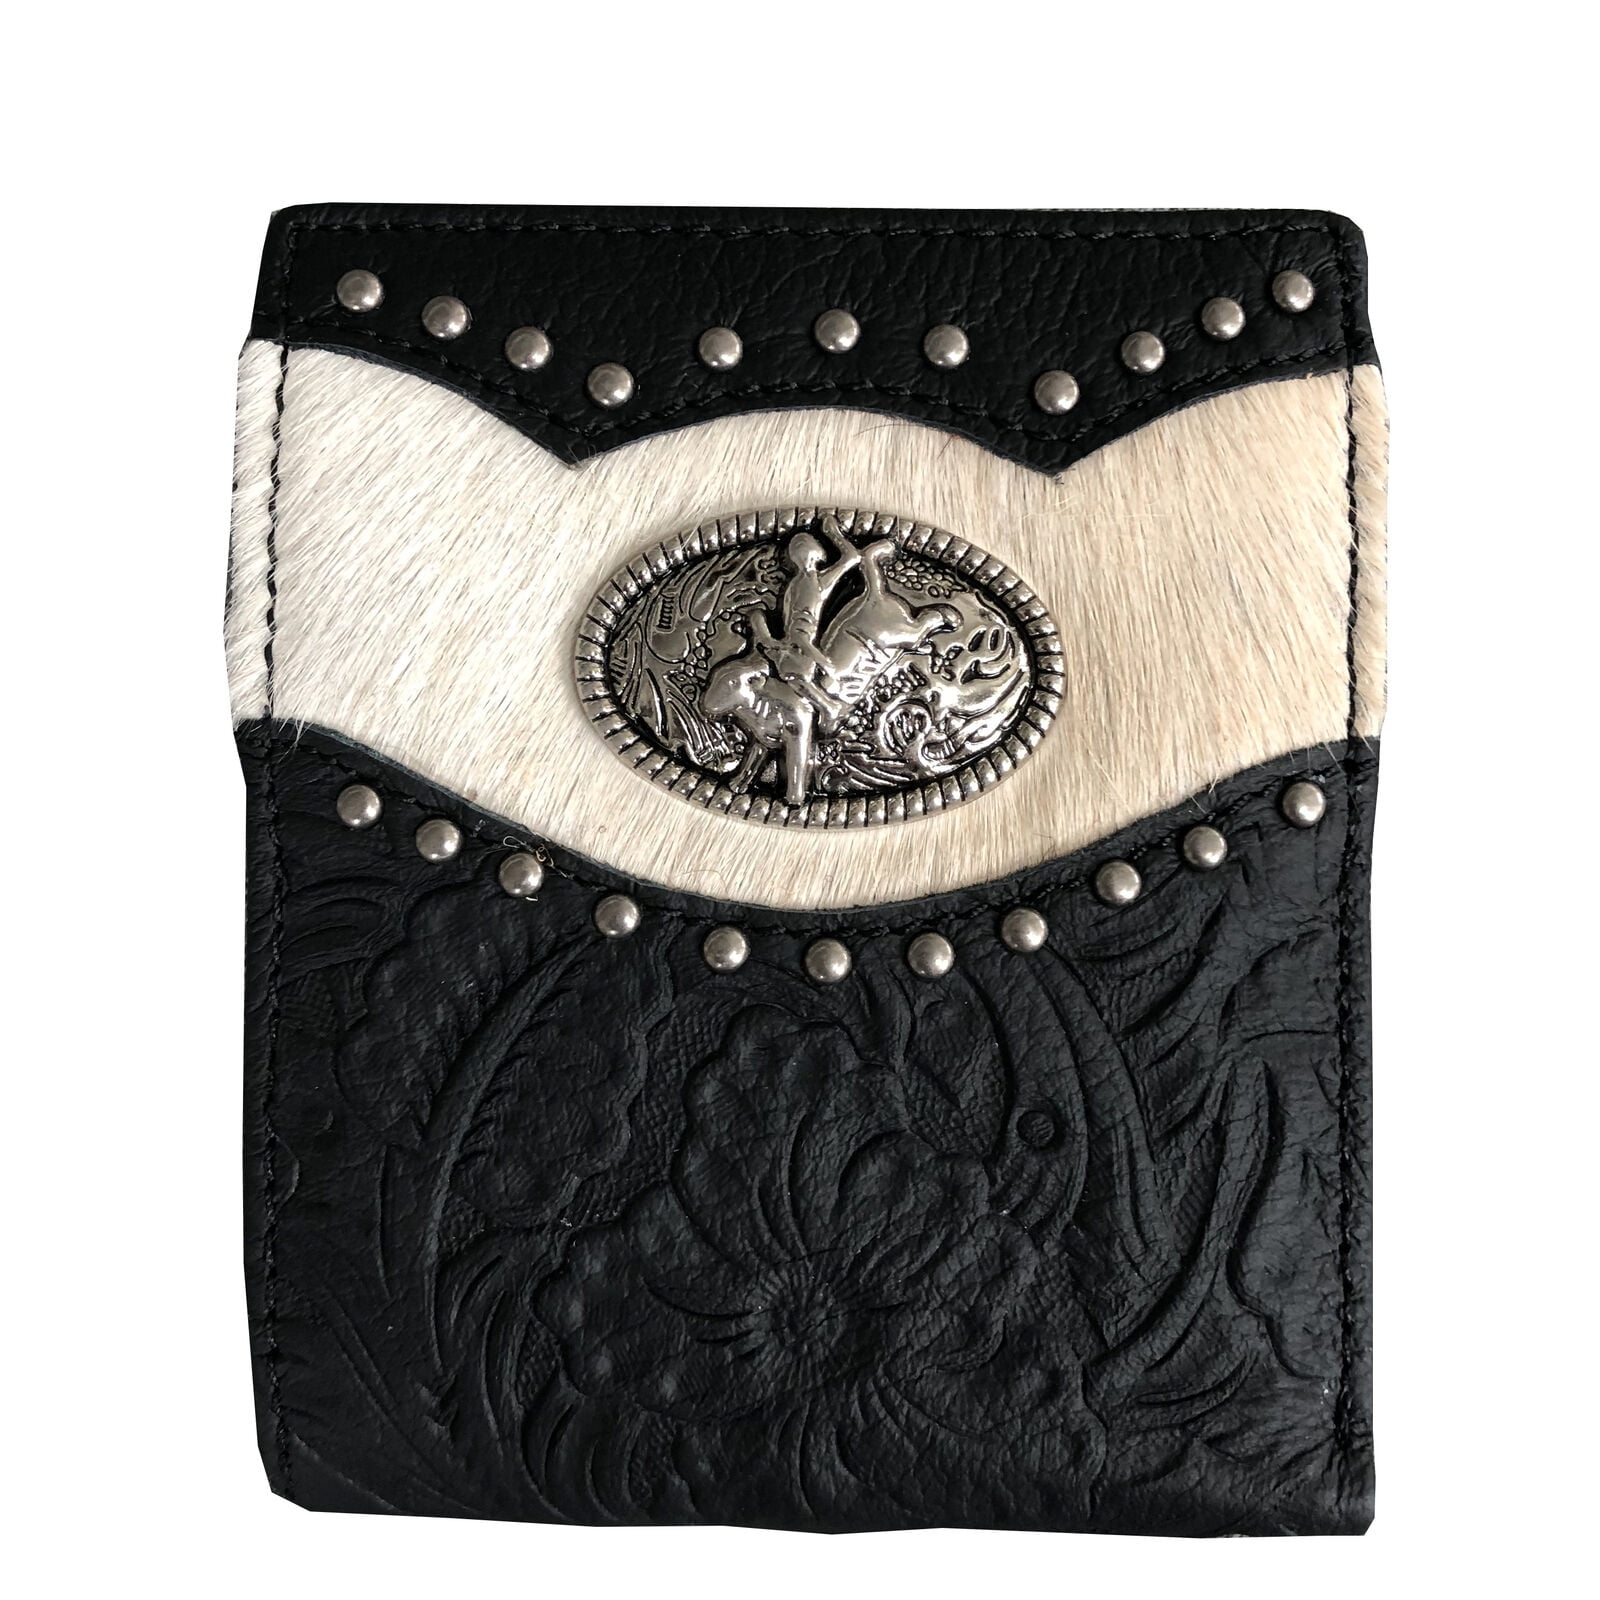 Janhooya - Western Cowboy Wallet Mens Genuine Leather Short Bifold Wallet for Men Rodeo ...